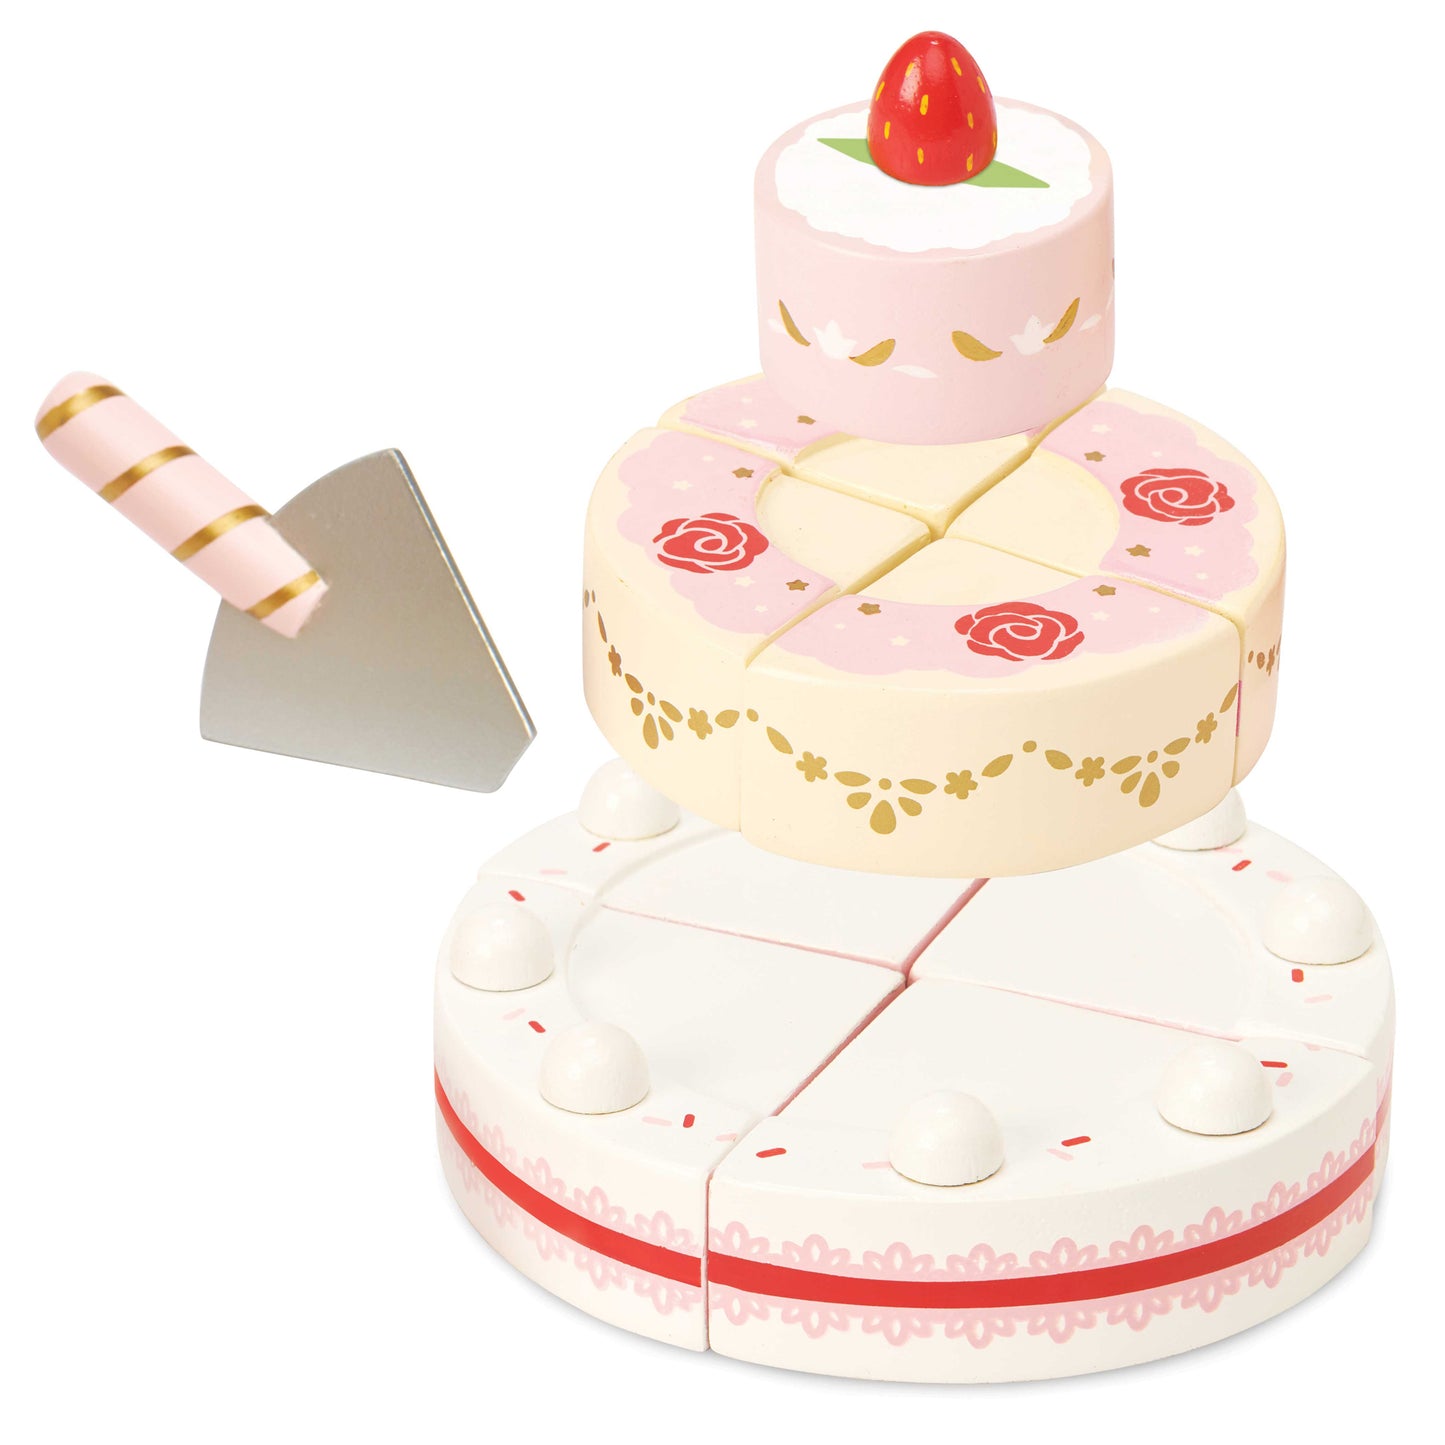 Le Toy Van Strawberry Wedding Cake